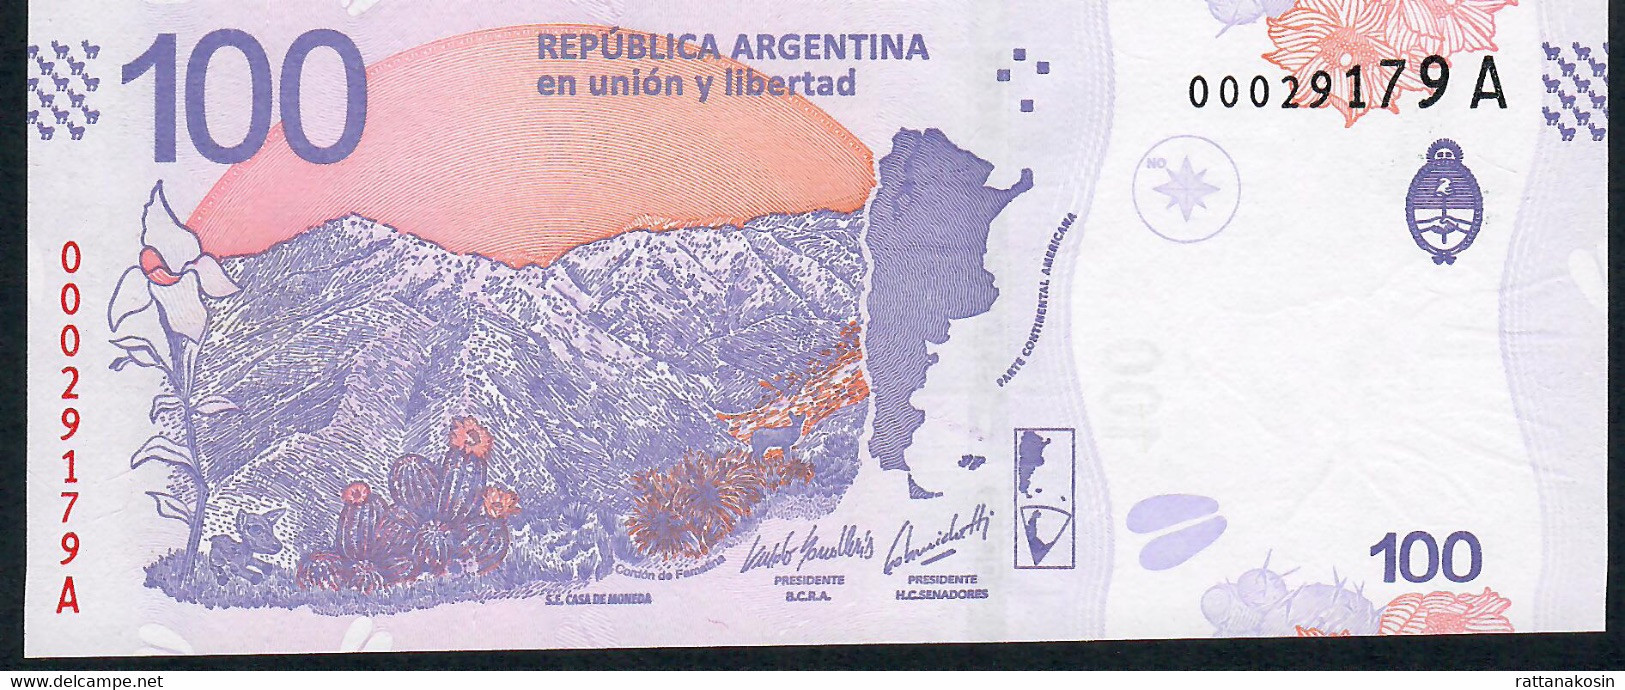 ARGENTINA  LOW # NLP 100 Pesos 2018 Série A Signature 90 Sandleris/Michetti # 00029179A   UNC. - Argentine